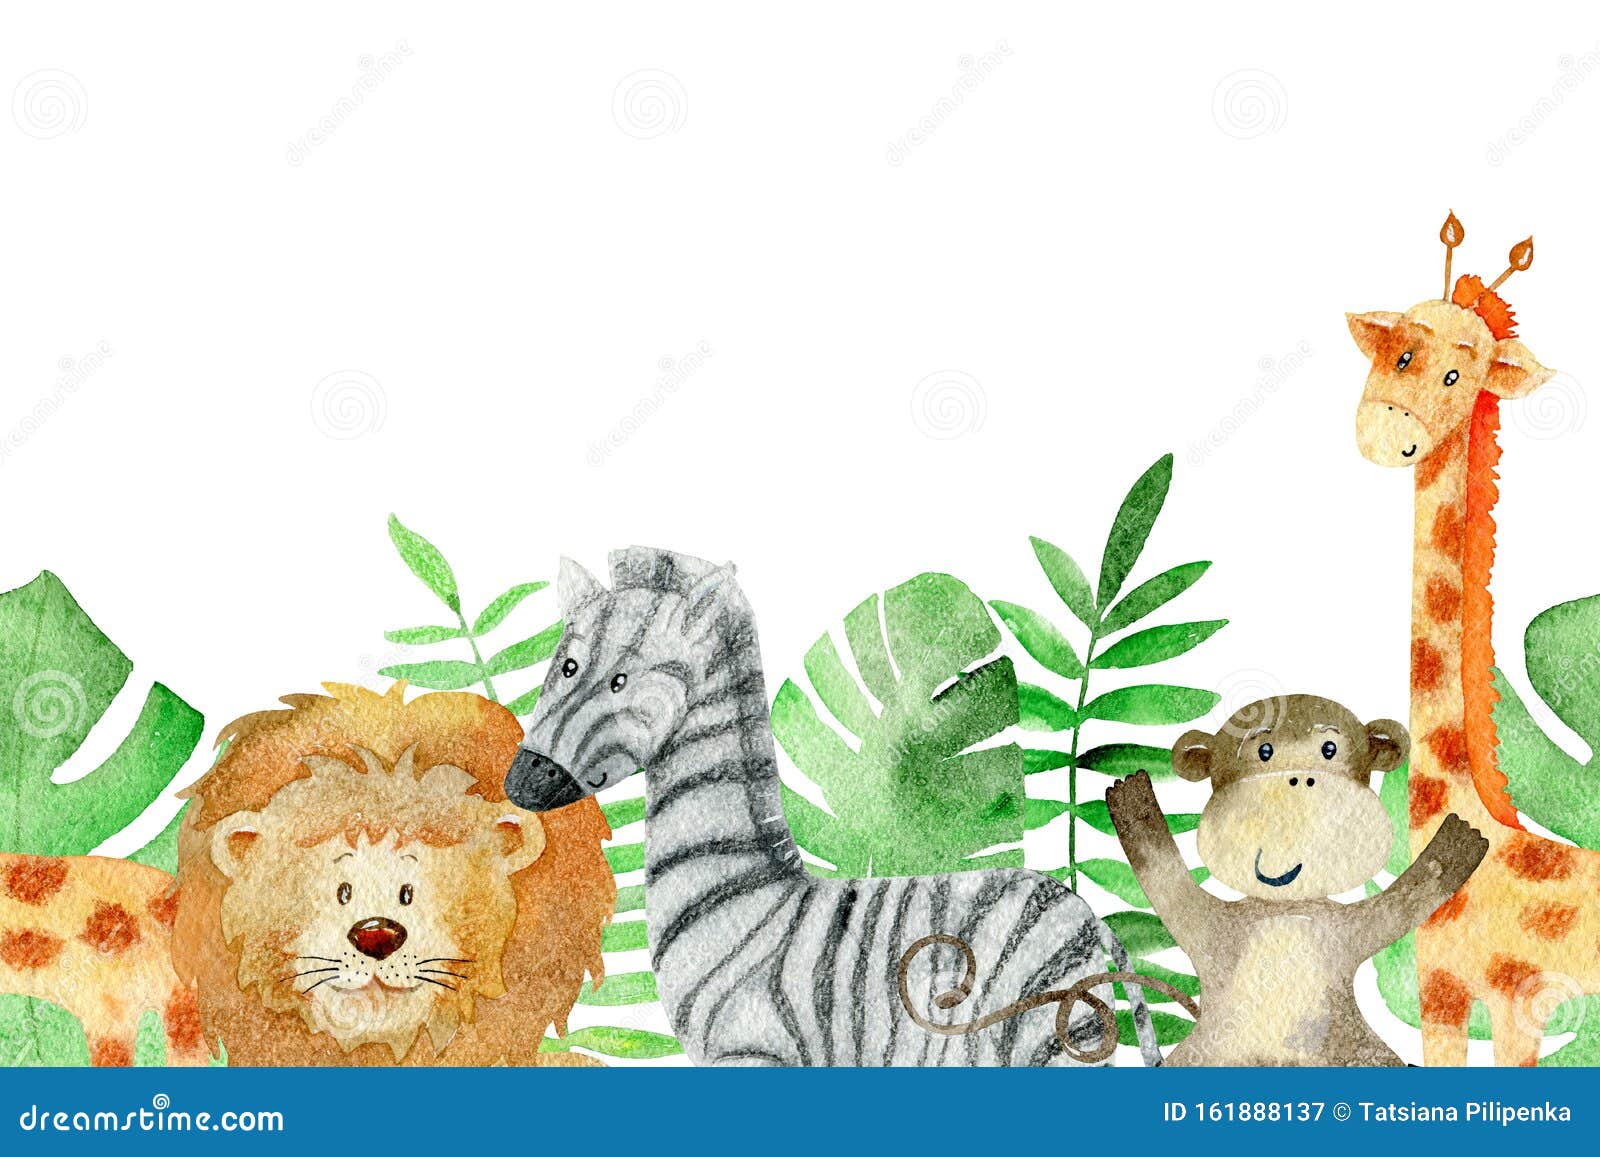 2 Expressions Jungle Safari Animals Babies Wallpaper Border 5 Yards for  sale online  eBay